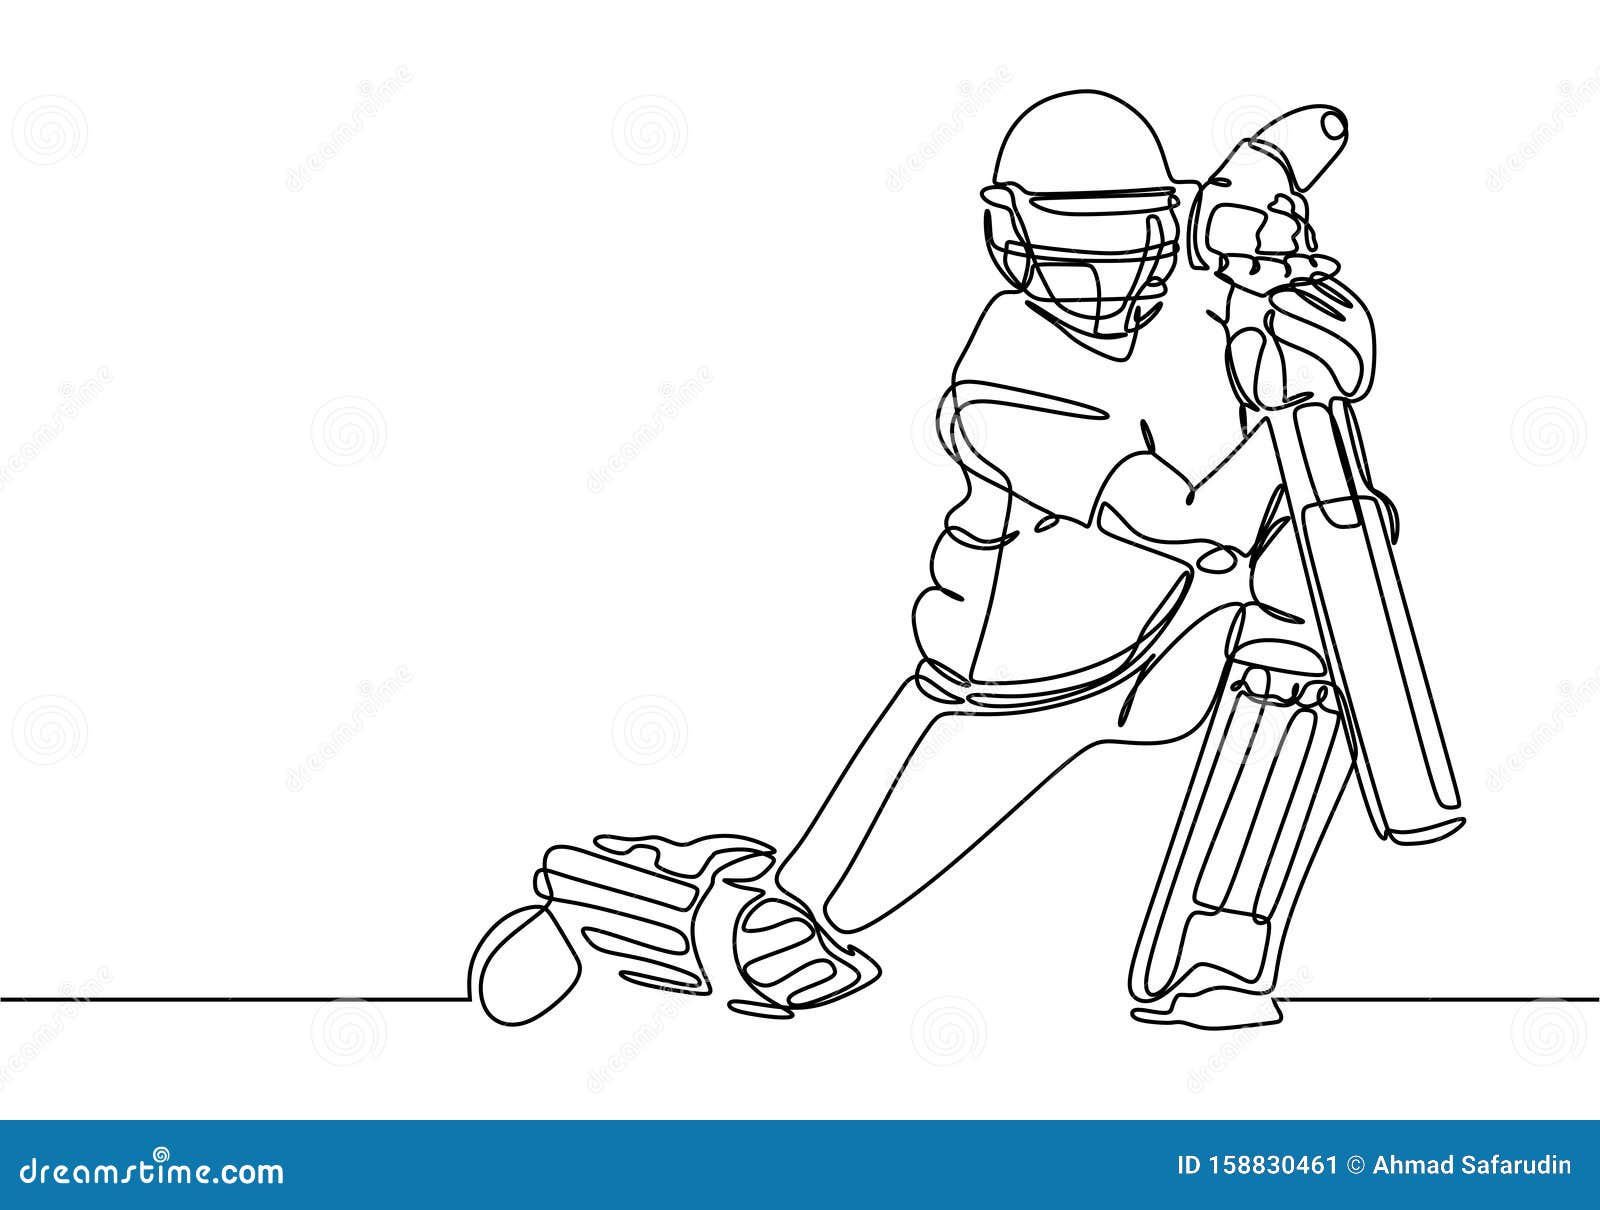 Cricket Drawing Images  Free Download on Freepik